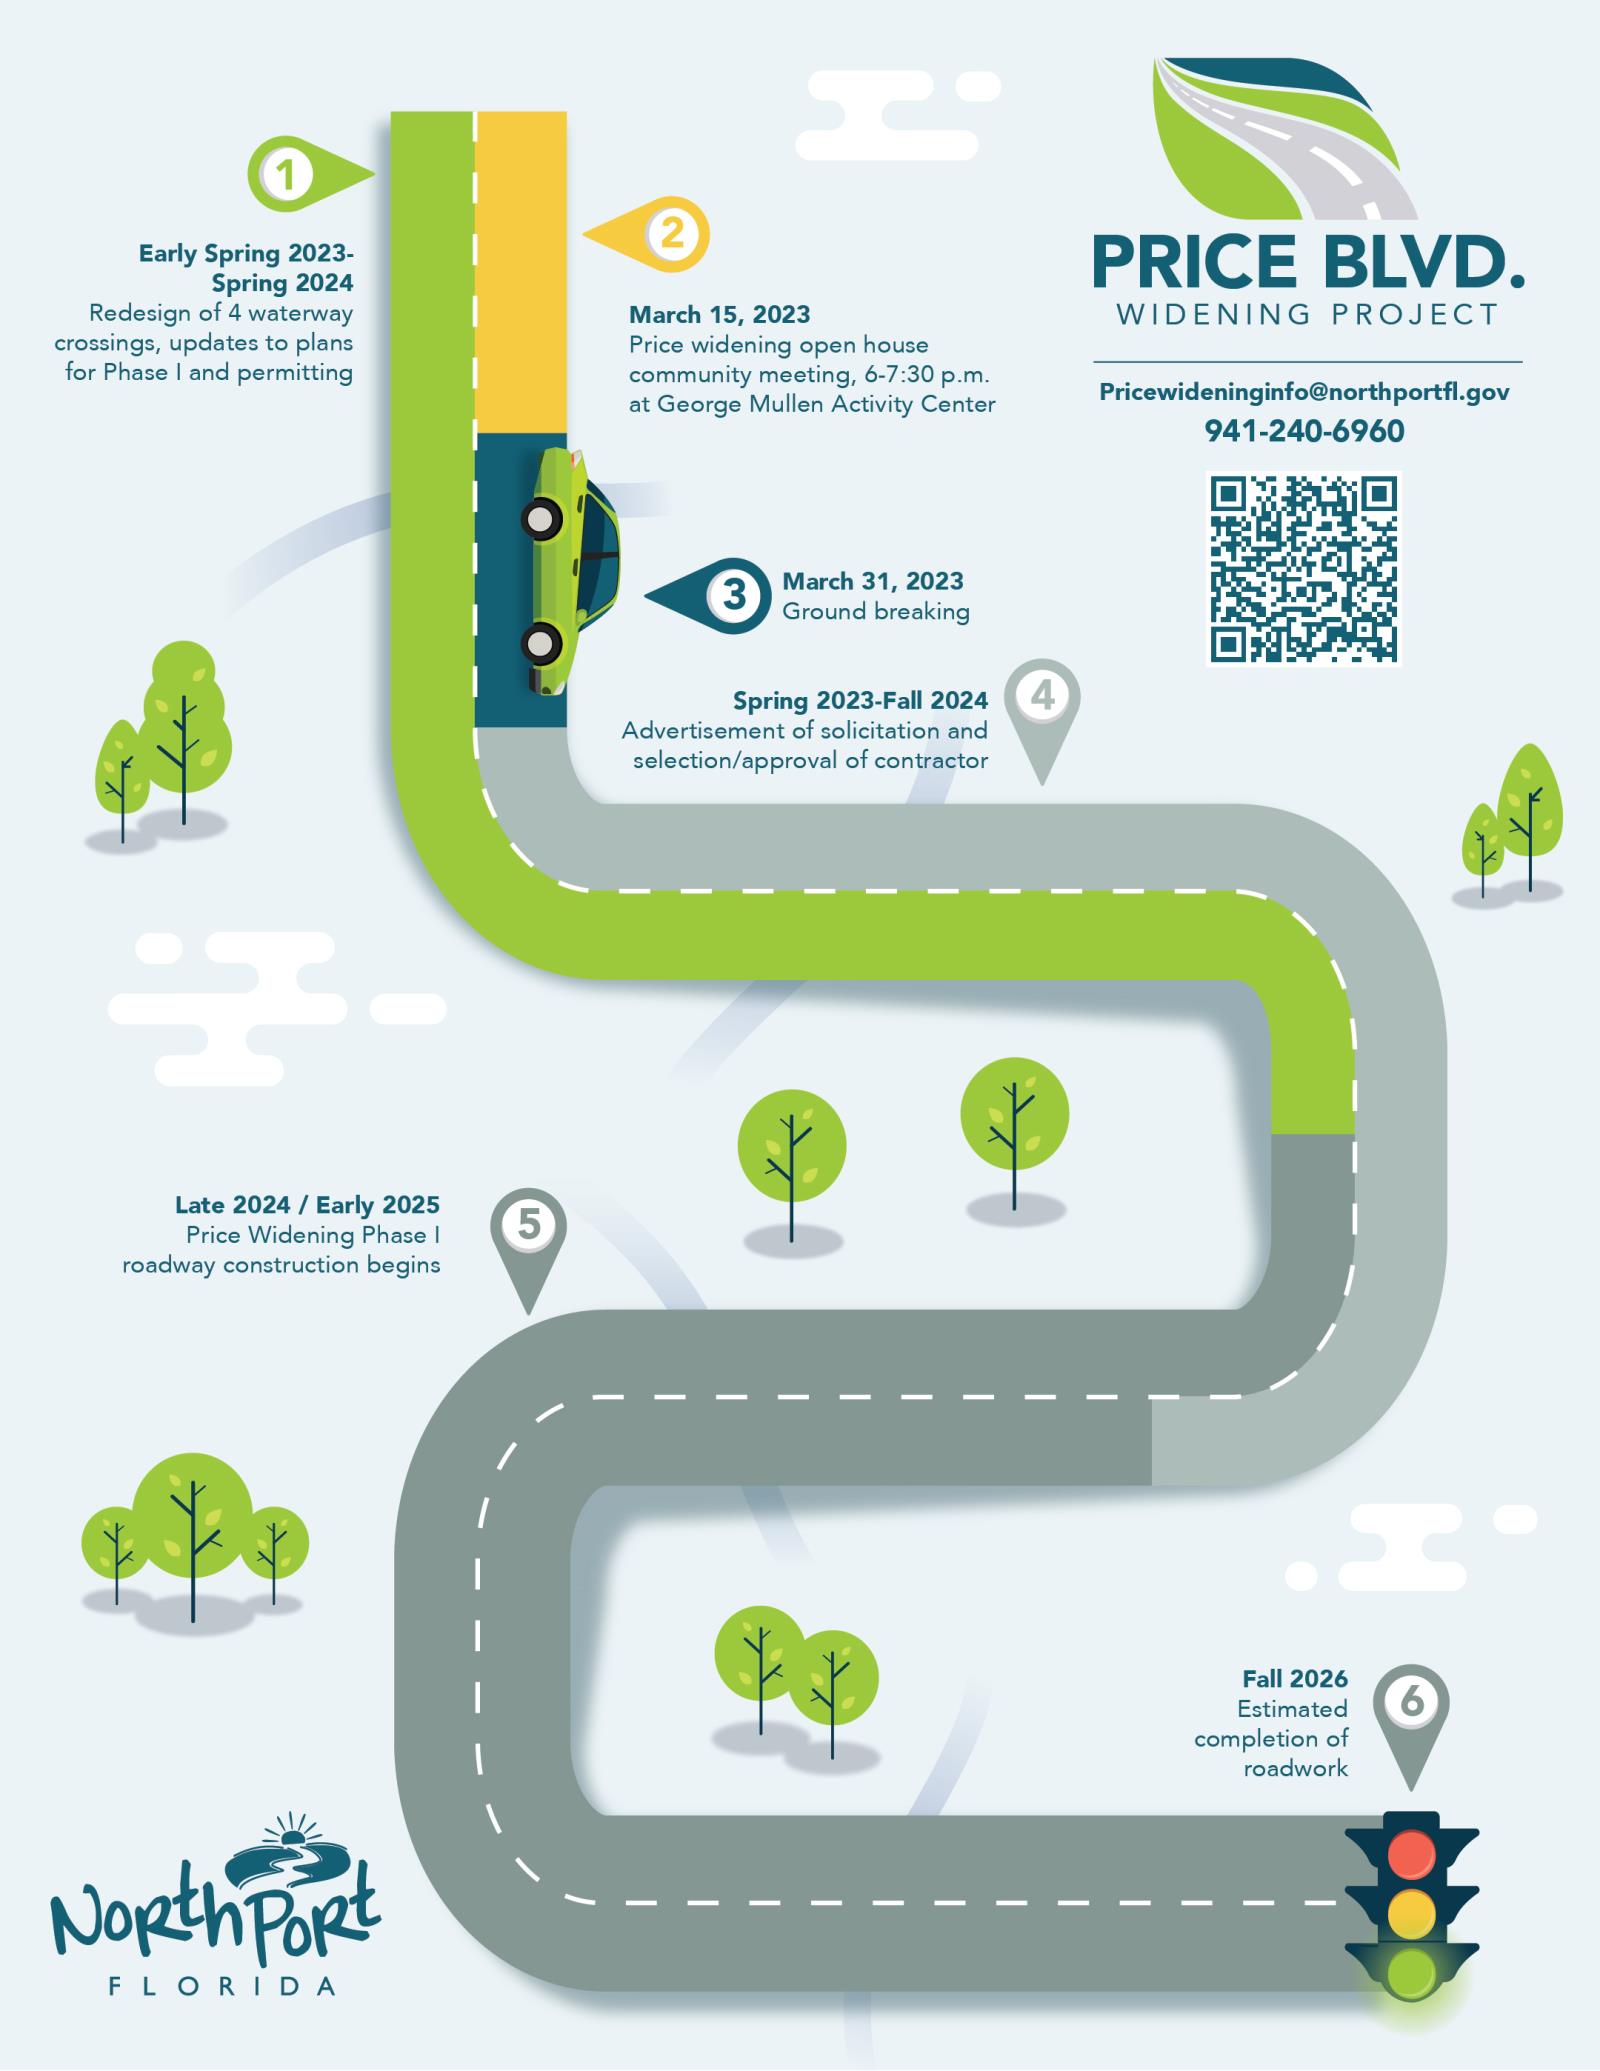 Price Blvd Widening Project roadmap